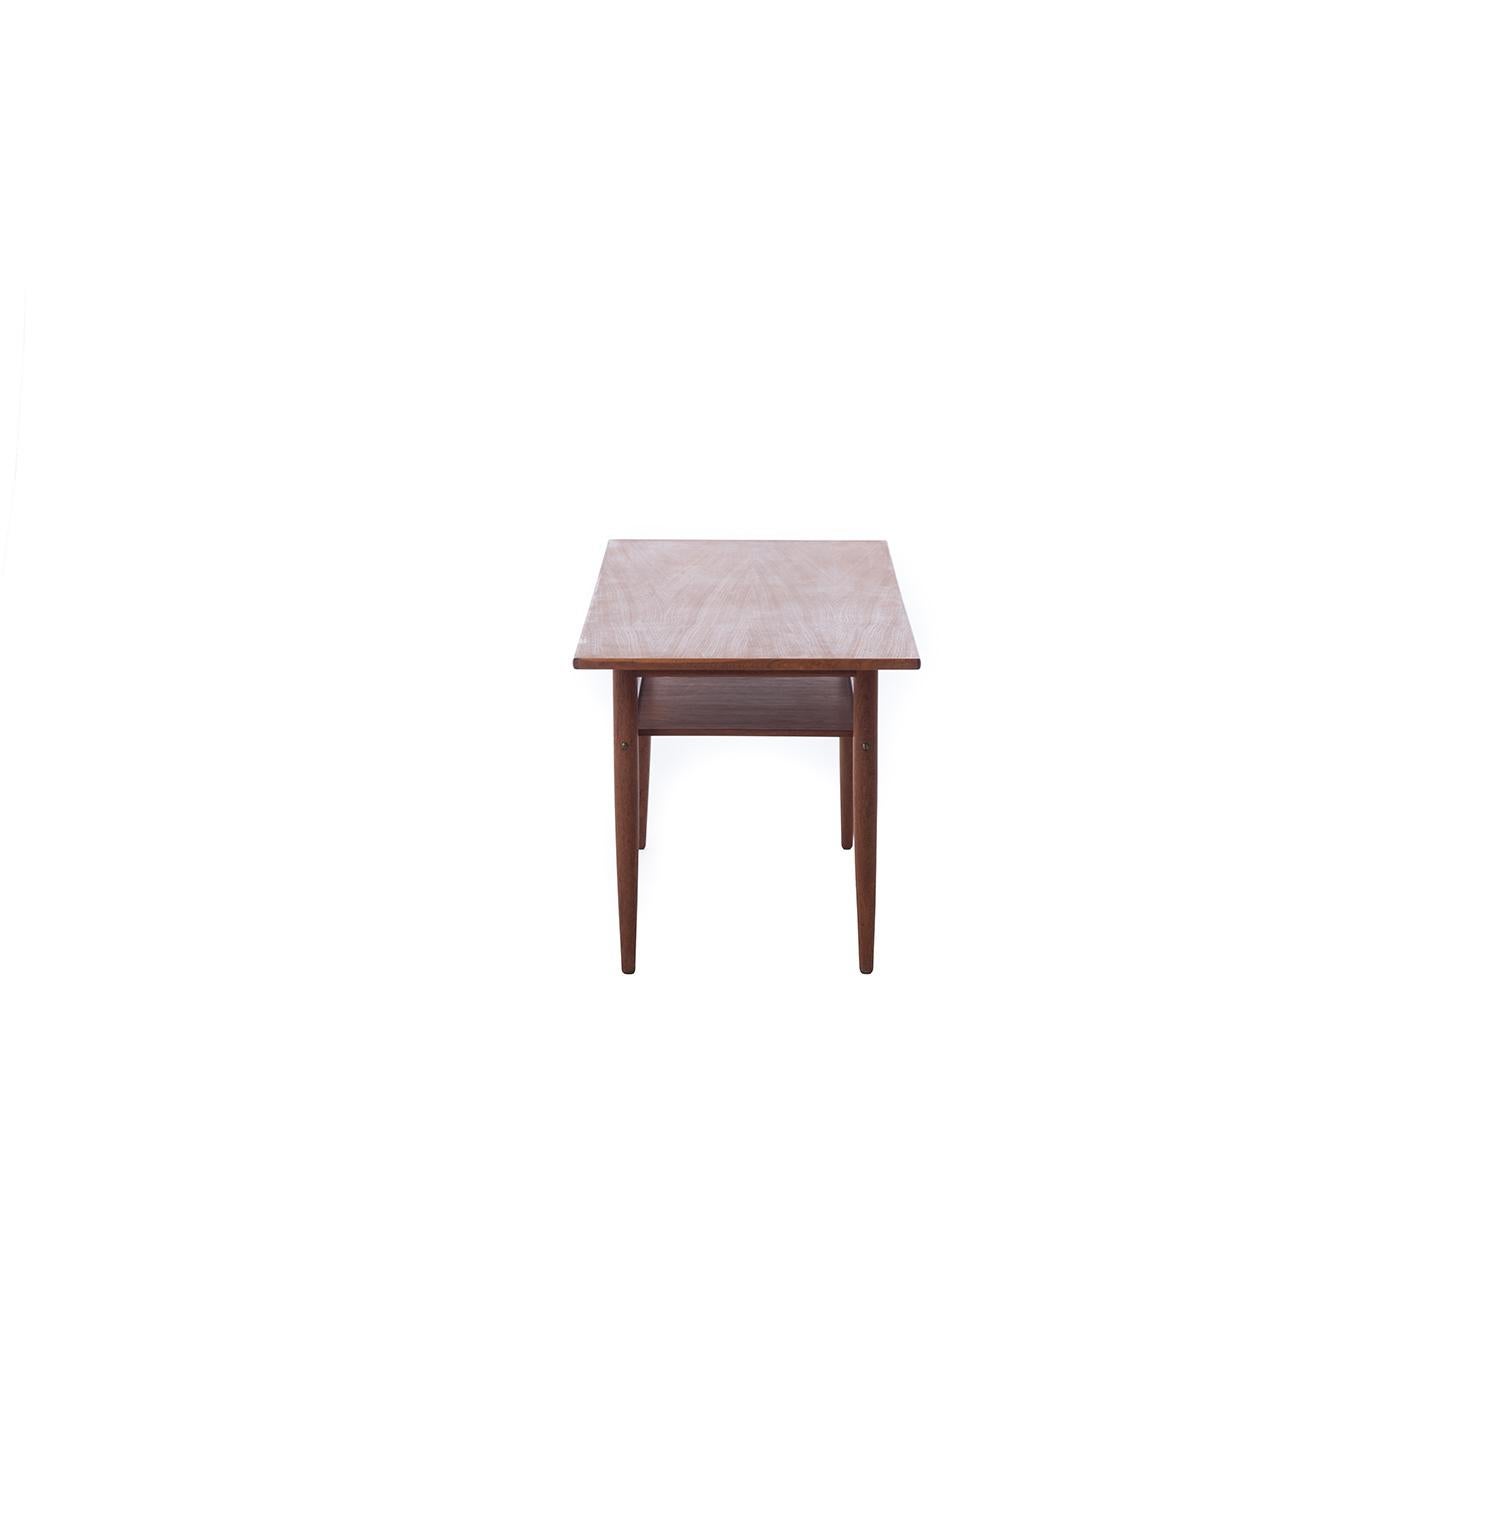 Danish Scandinavian Modern Teak Coffee Table with Turned Legs & Solid Shelf